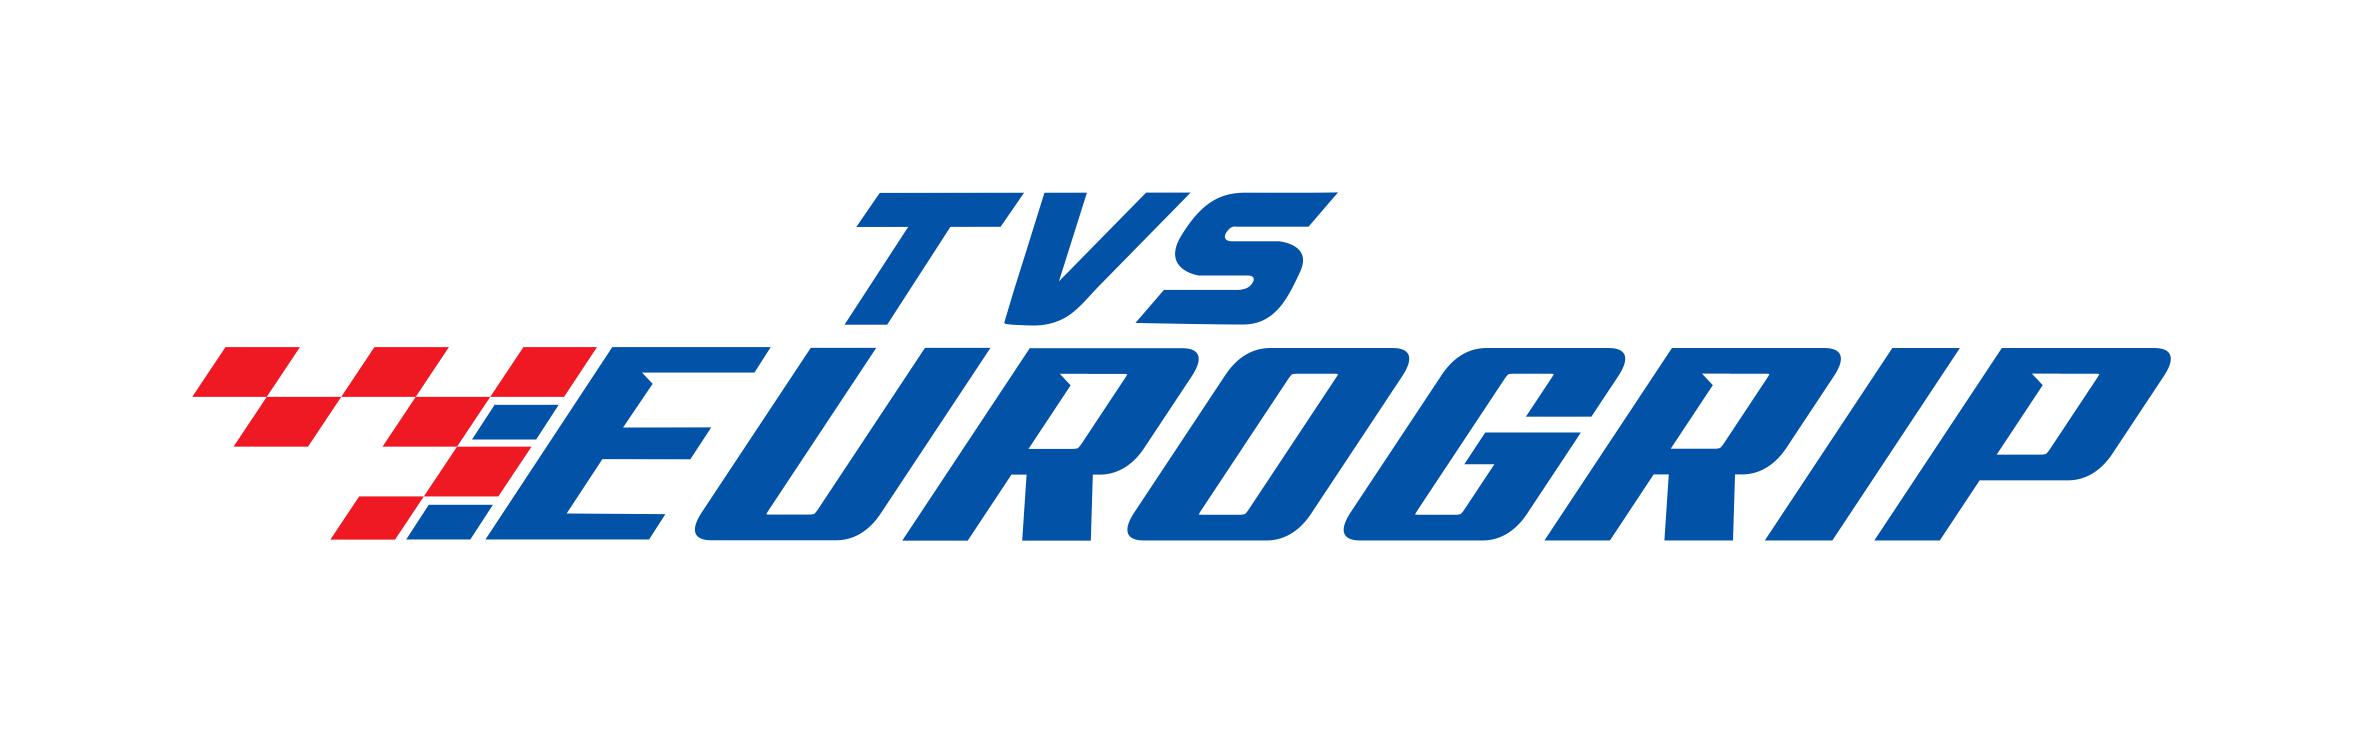 tvs-srichakra-enters-europe-two-wheeler-tyre-market-with-exclusive-product-range-under-eurogrip-brand